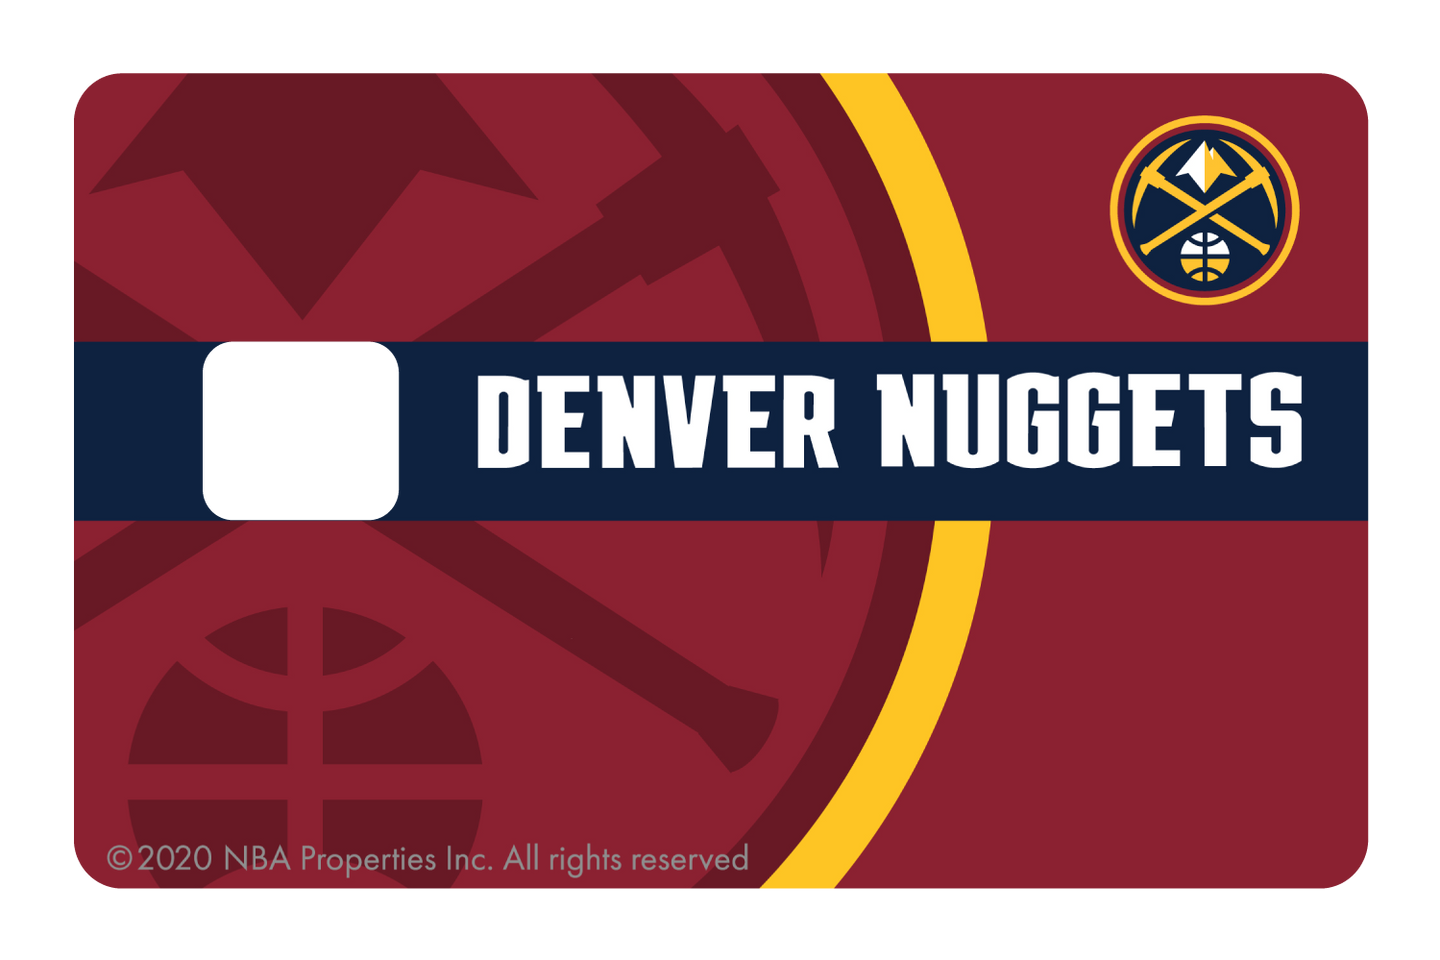 Denver Nuggets: Midcourt